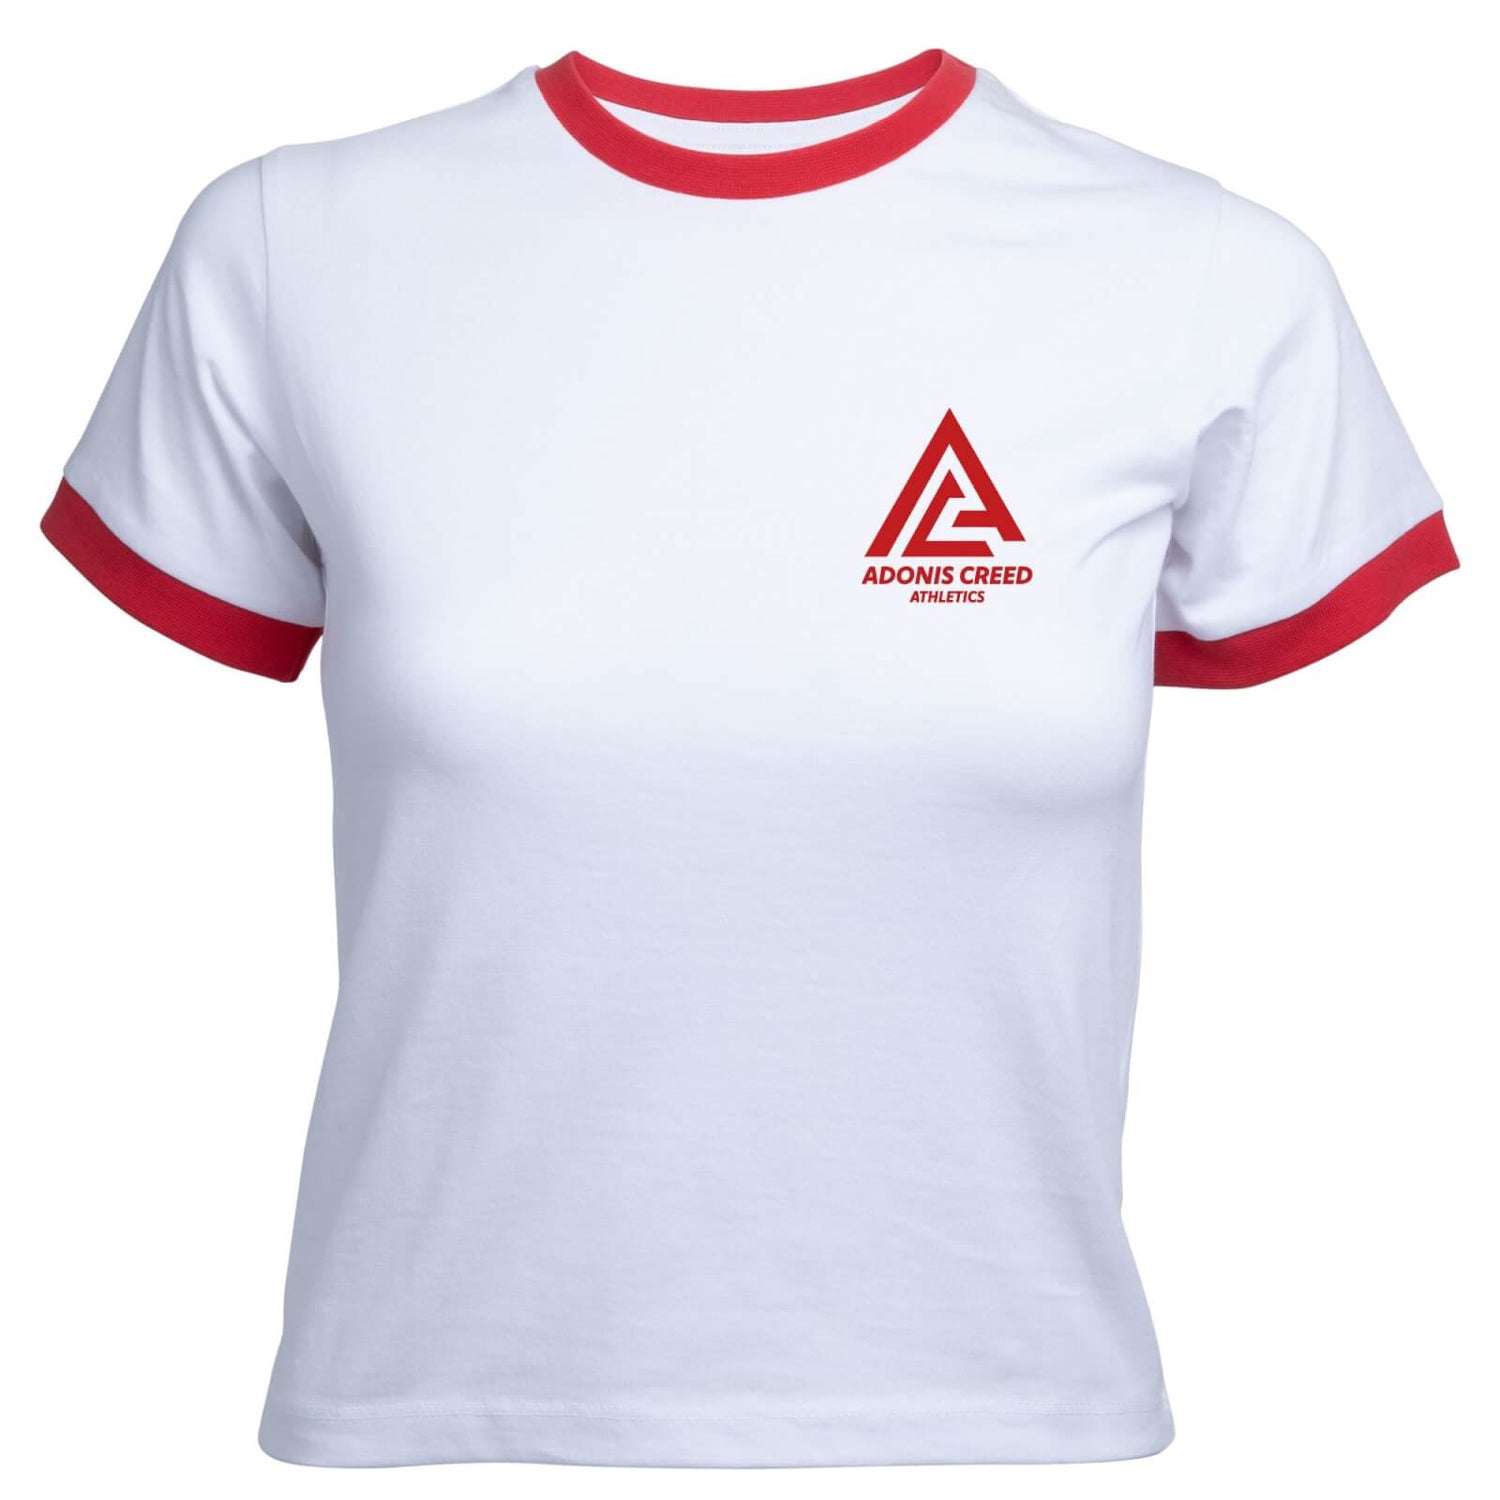 Creed Adonis Creed Athletics Logo Women's Cropped Ringer T-Shirt - White Red